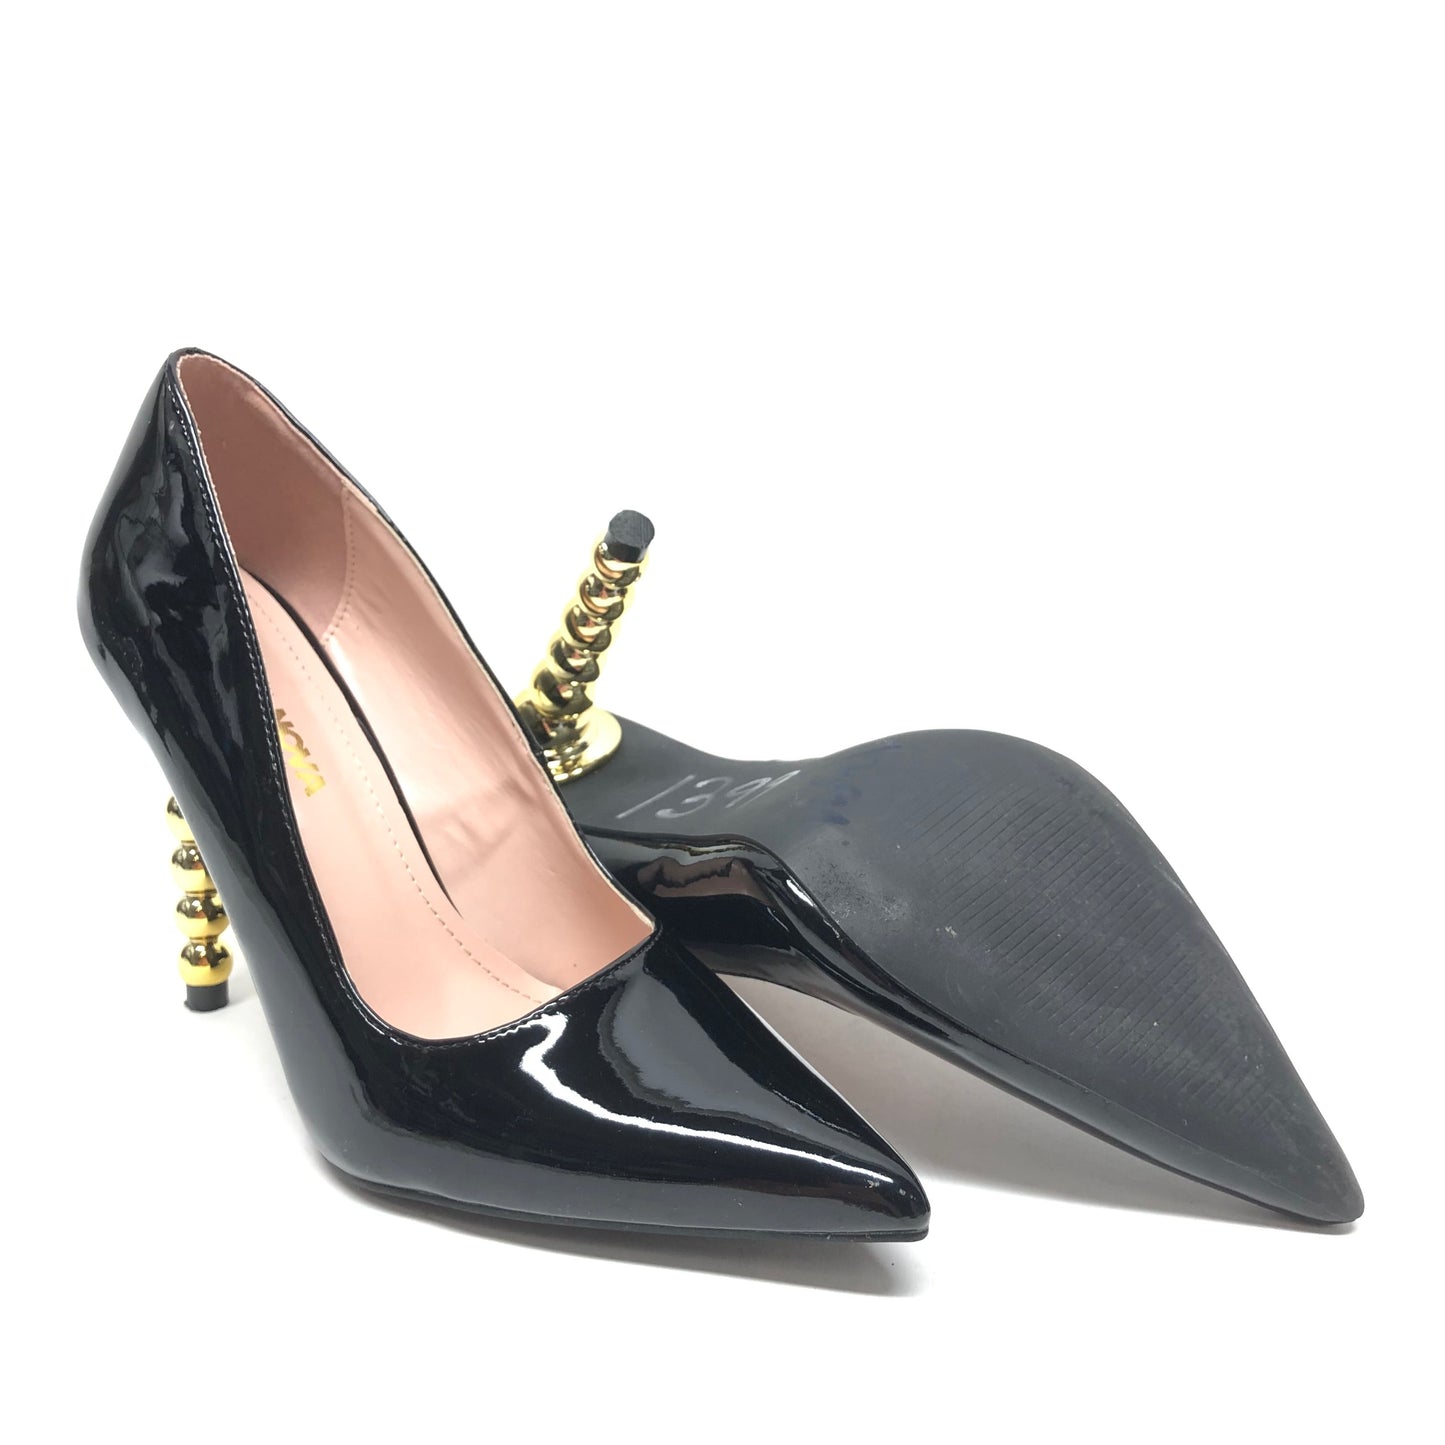 Black & Gold Shoes Heels Stiletto Fashion Nova, Size 8